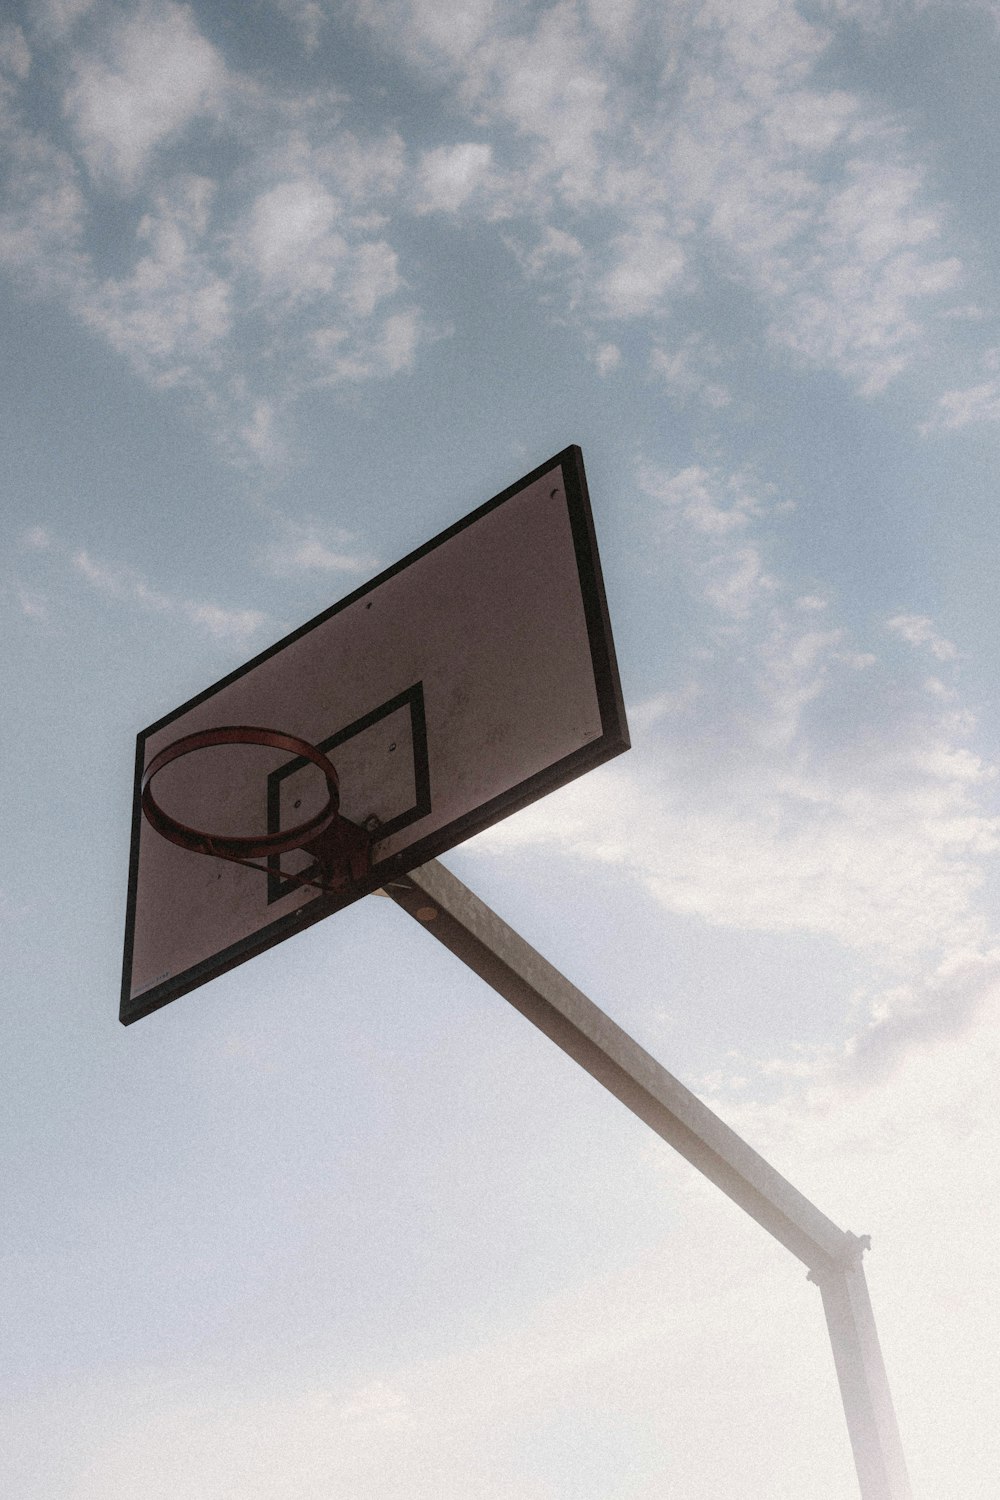 black and white basketball hoop under blue sky during daytime